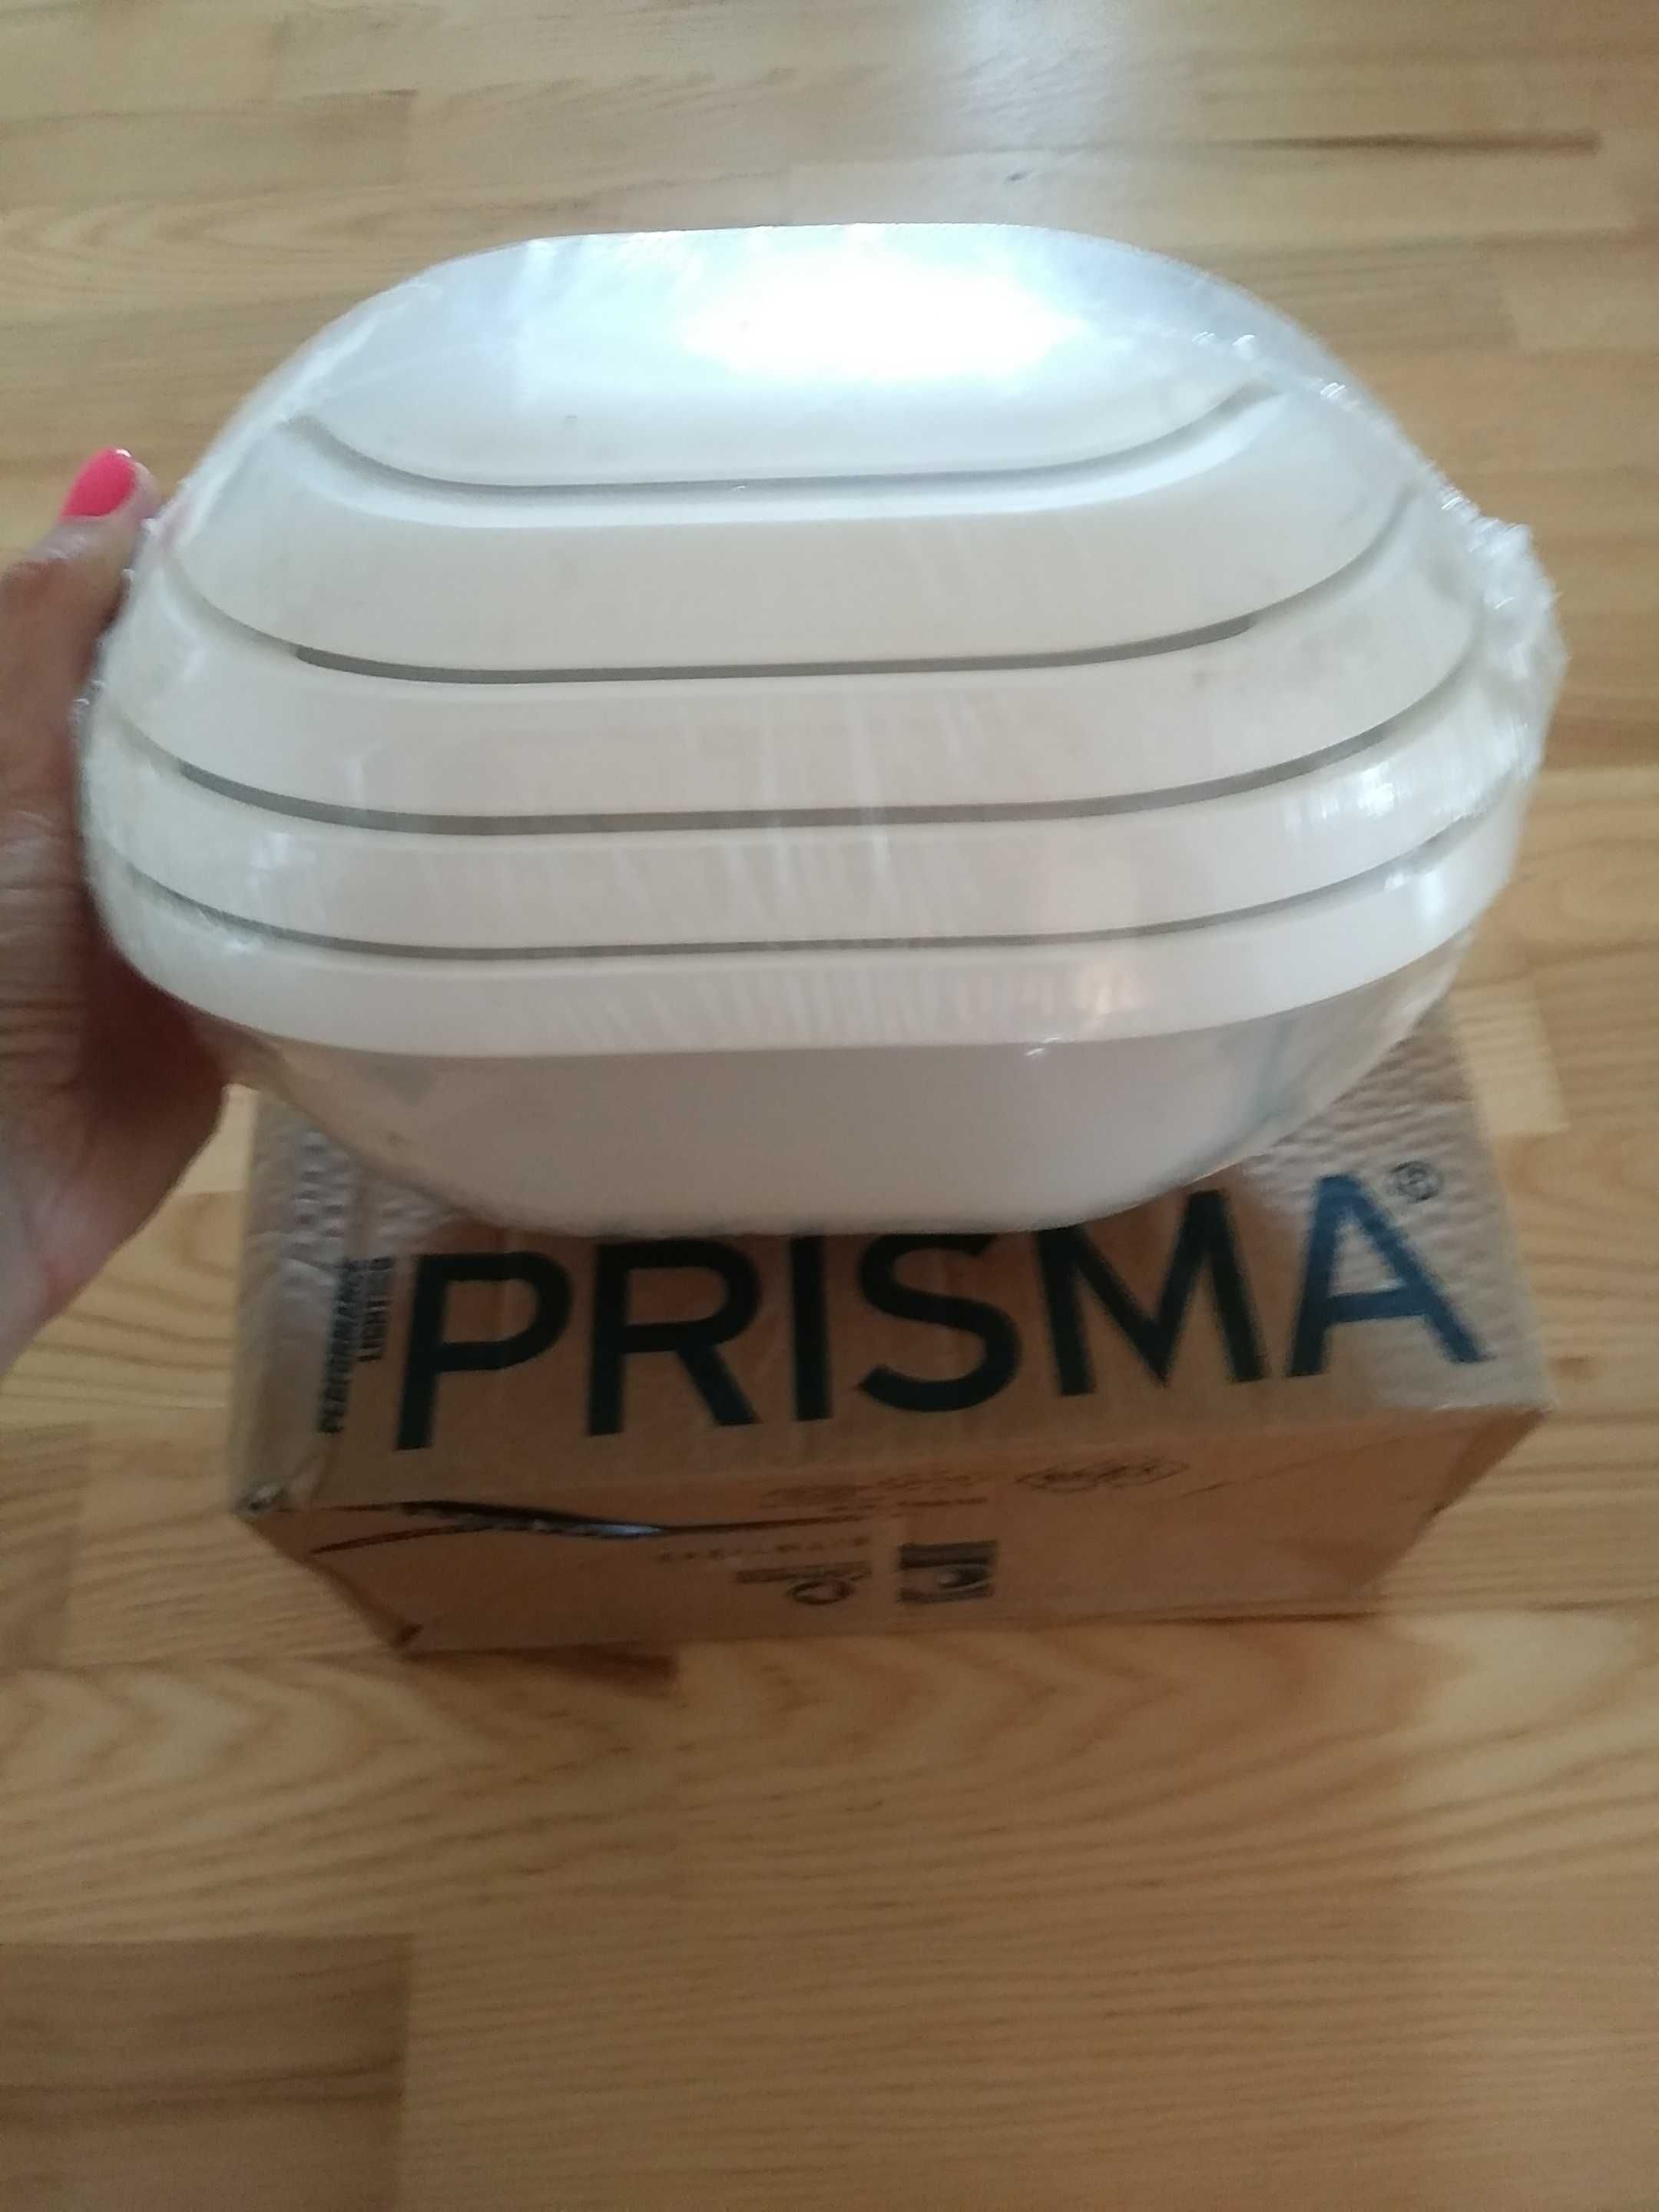 monia nowa lampa zewnętrzna IP 55 Prisma Performance led